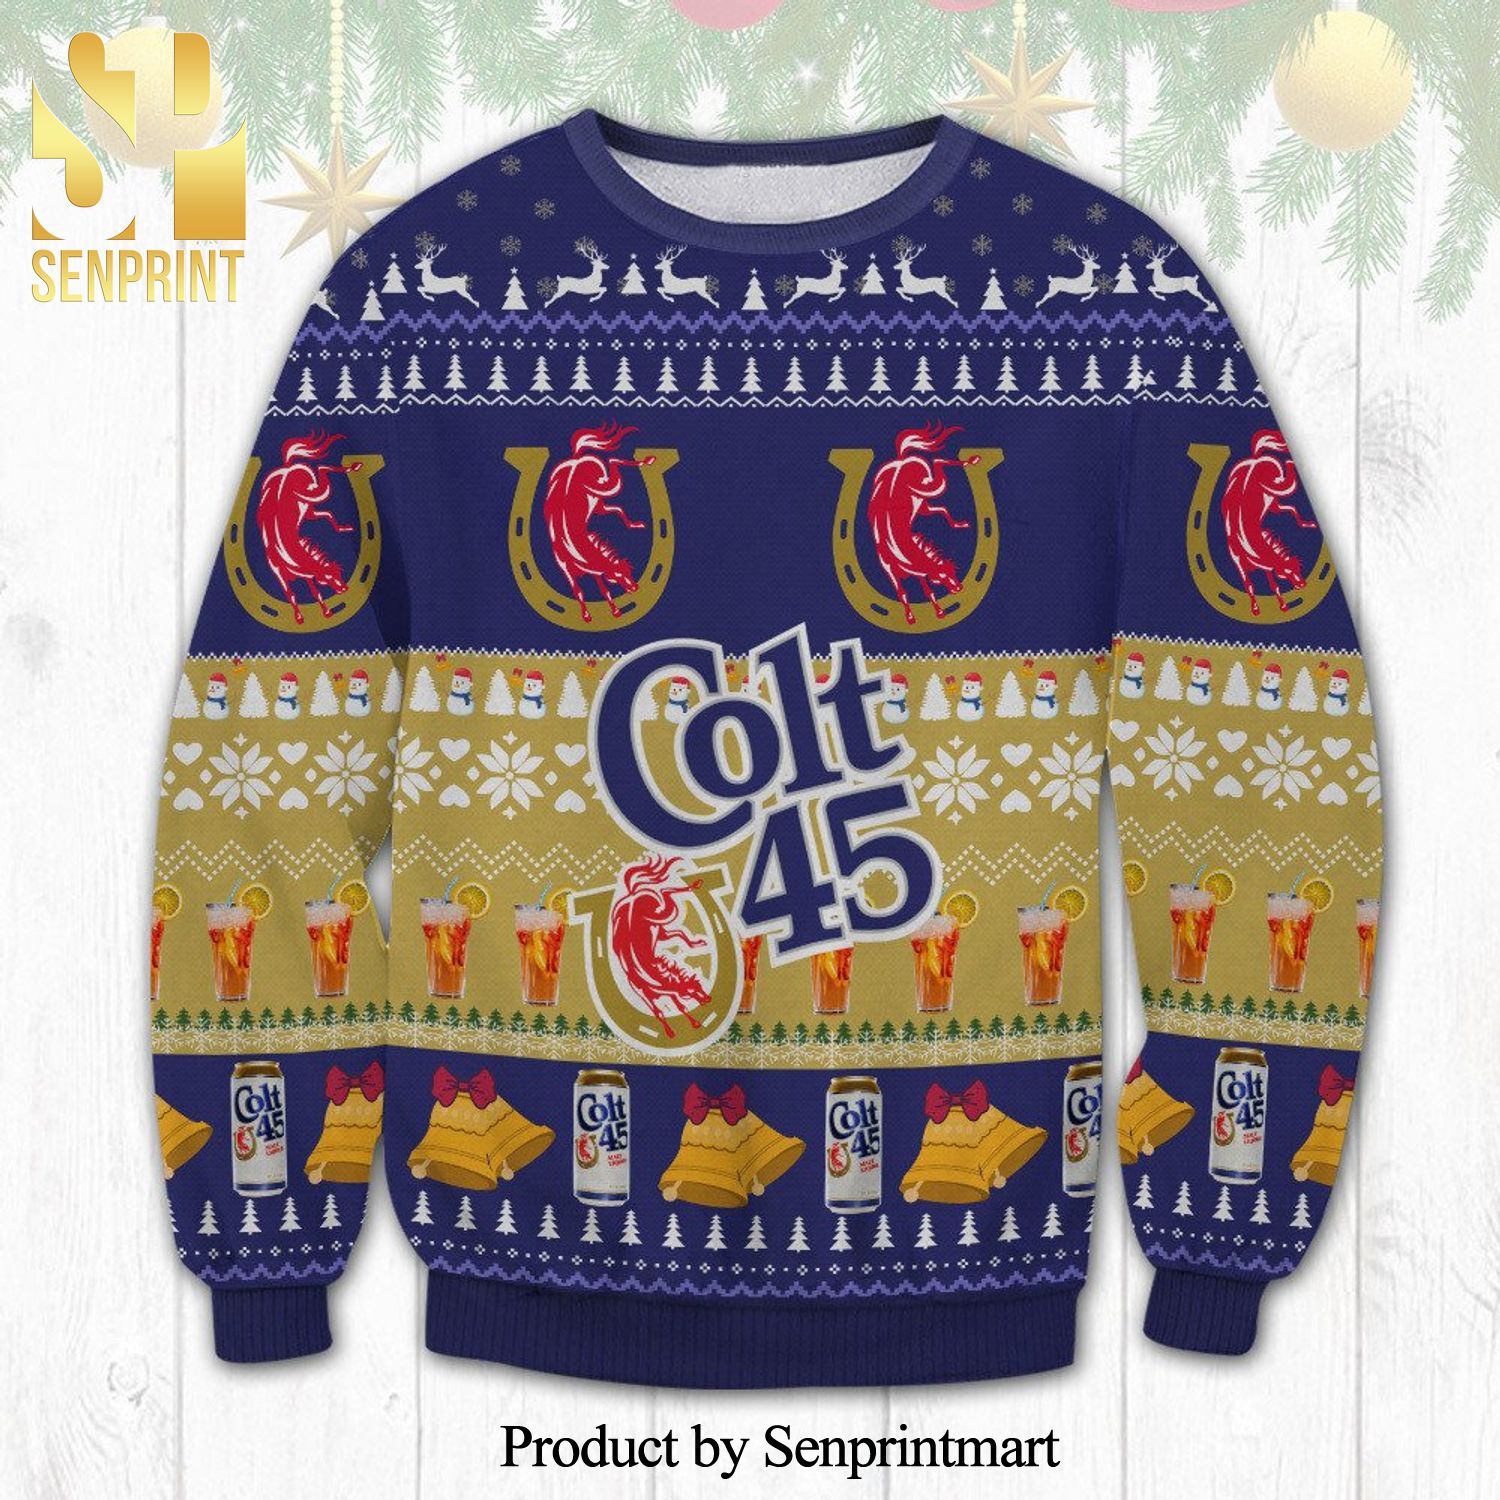 Colt 45 Malt Liquor Jingle Bells Knitted Ugly Christmas Sweater